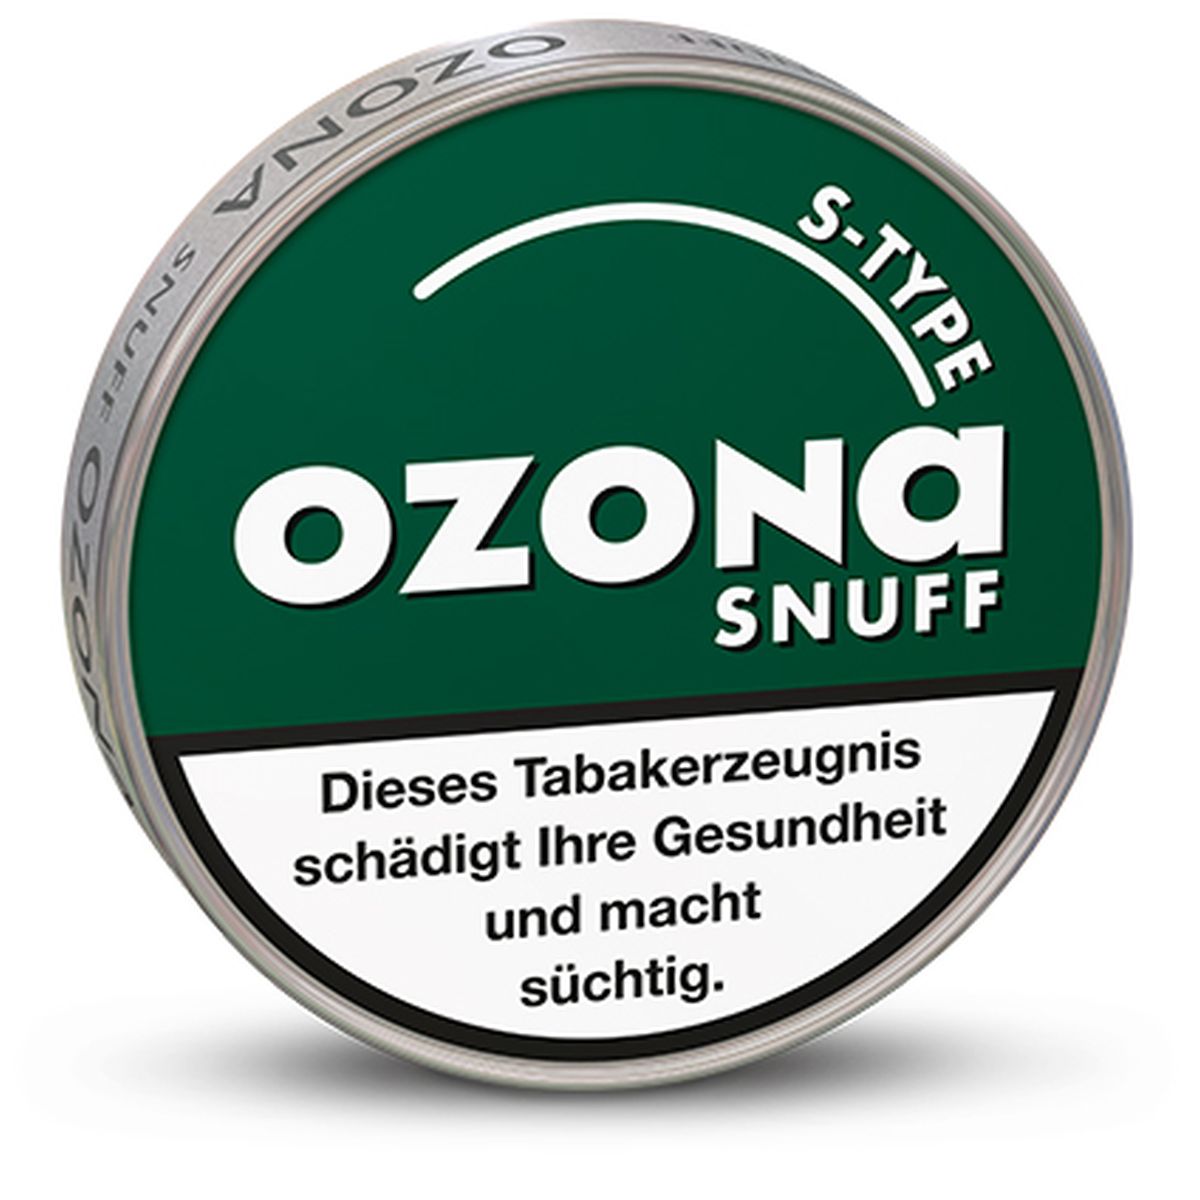 Ozona Ozona Schnupftabak S-Type Snuff 5g bei www.Tabakring.de kaufen